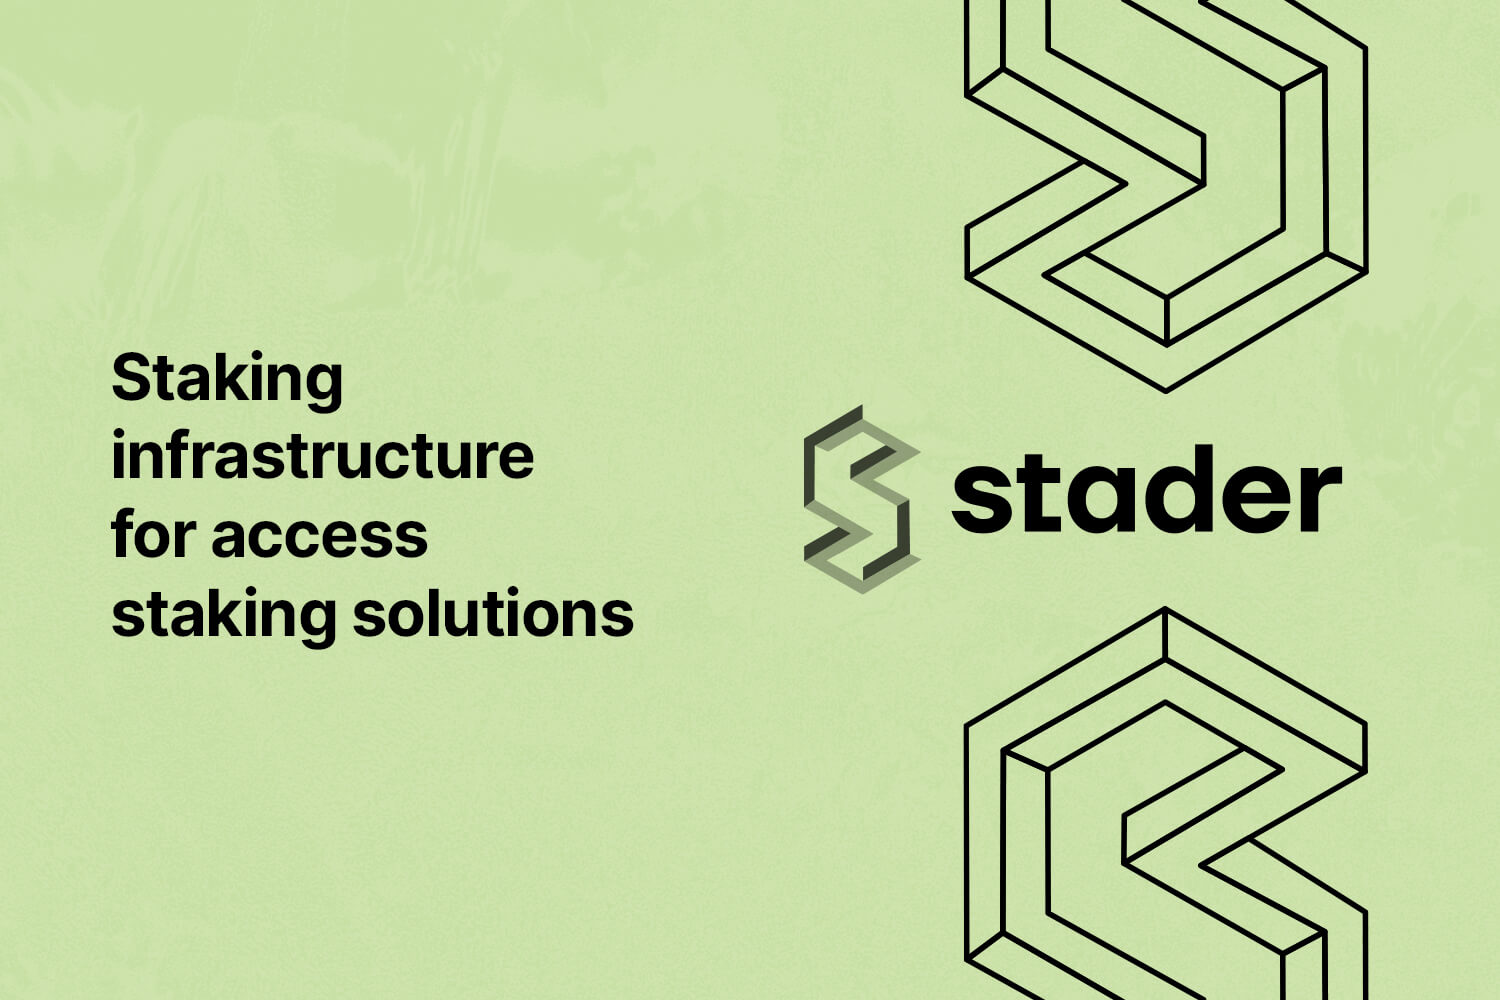 01Node Joins The Stader Labs Validators